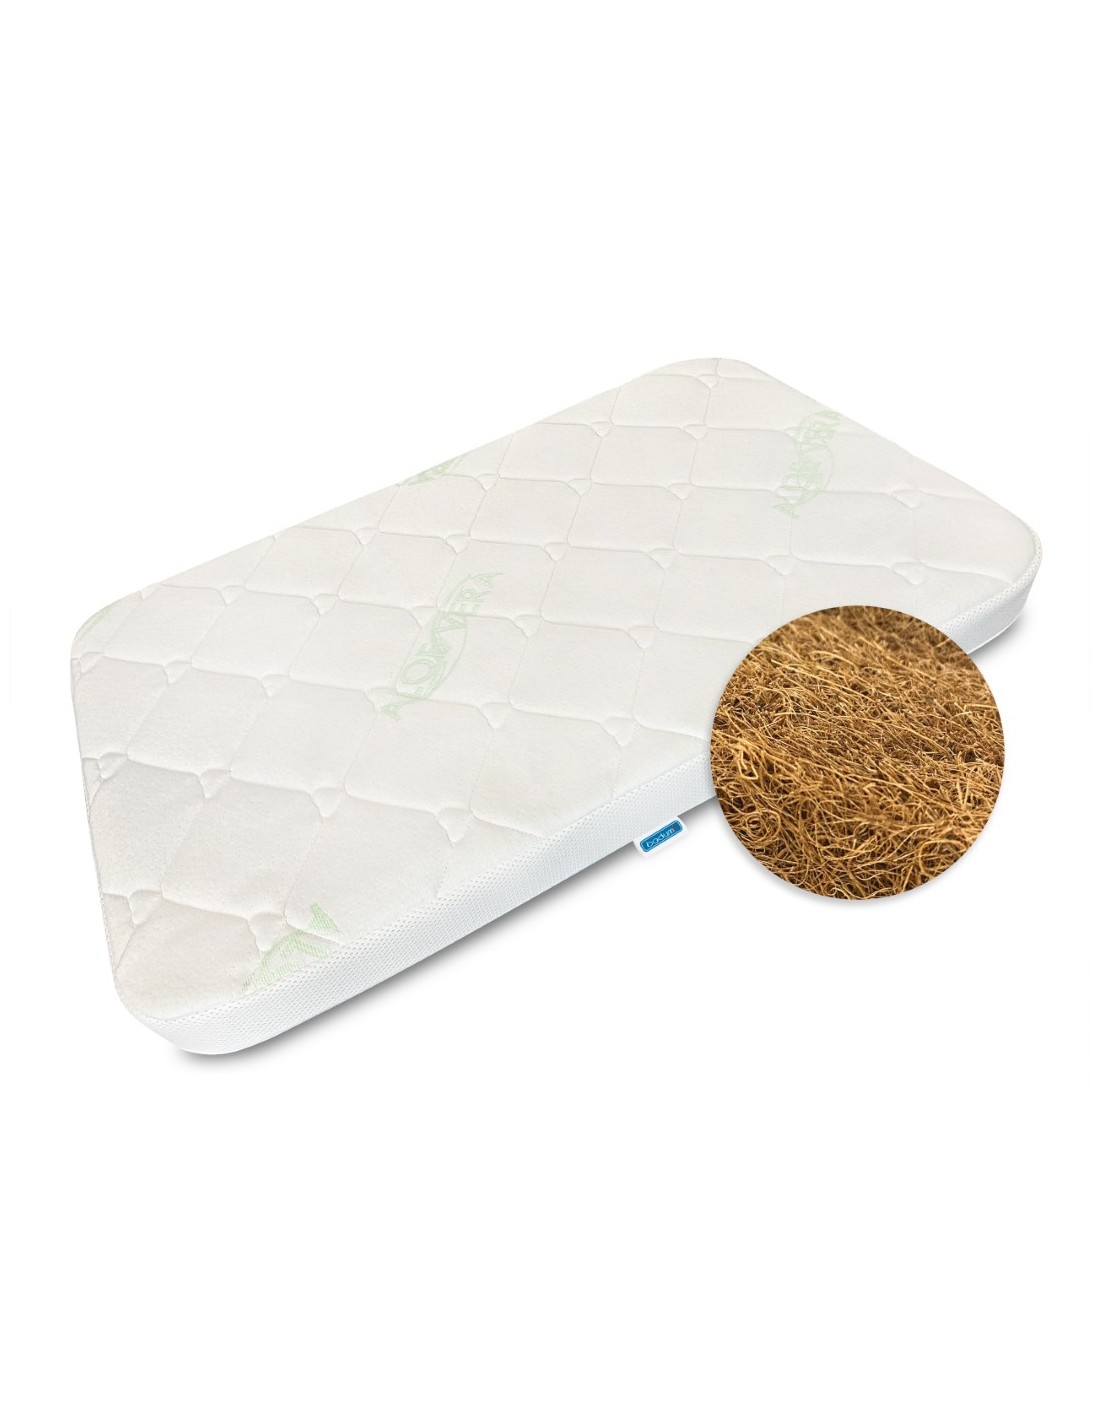 https://badumshop.com/1963-thickbox_default/foam-coconut-mattress-for-an-extra-bed-kinderkraft-neste-up-89x52x8-cm.jpg